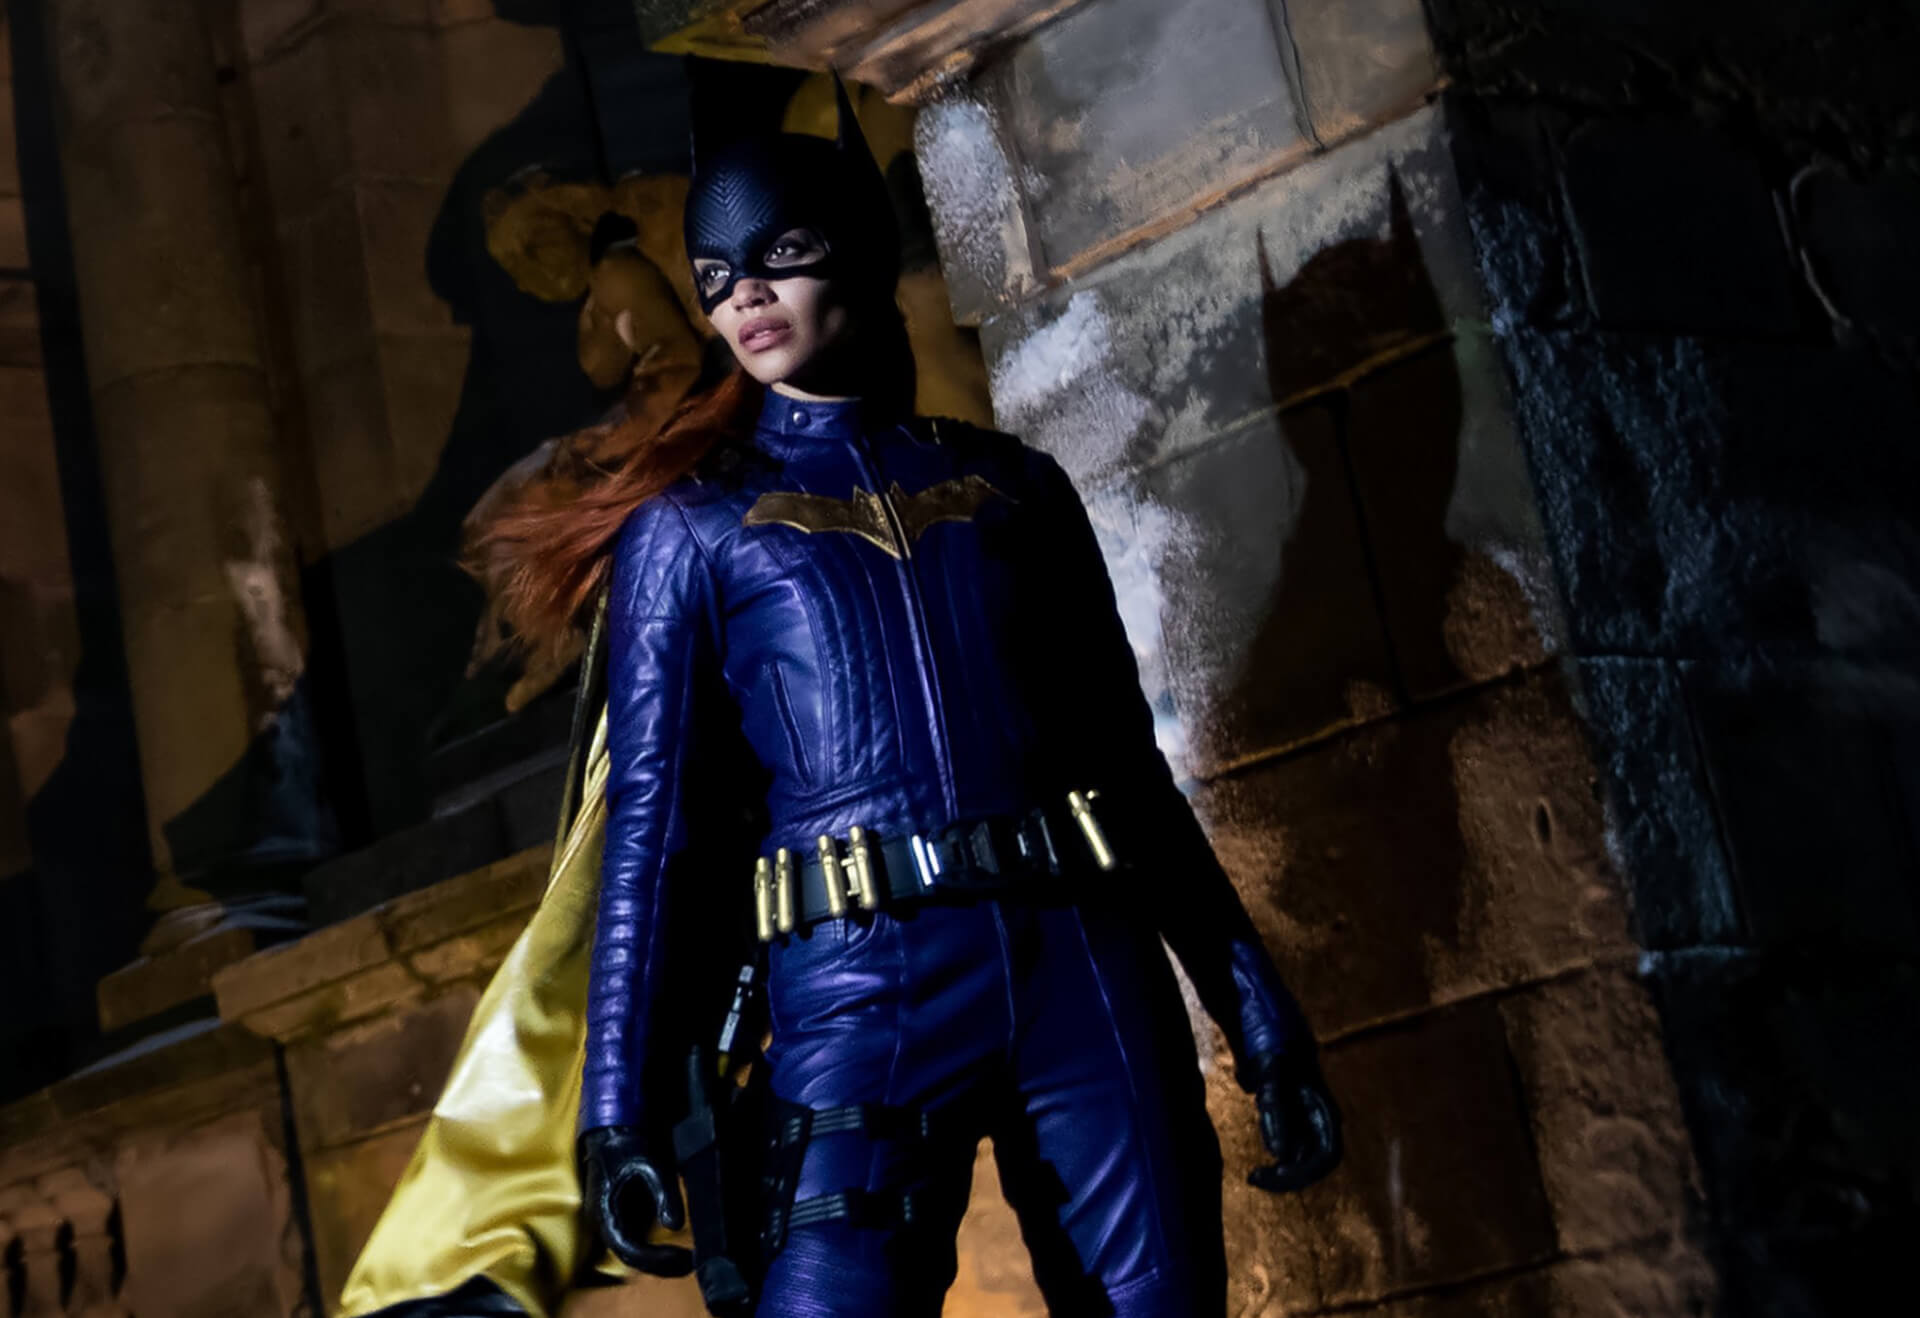 A Warner Bros. Discovery sem mozikban, sem HBO Maxon nem fogja bemutatni a Batgirl című filmet